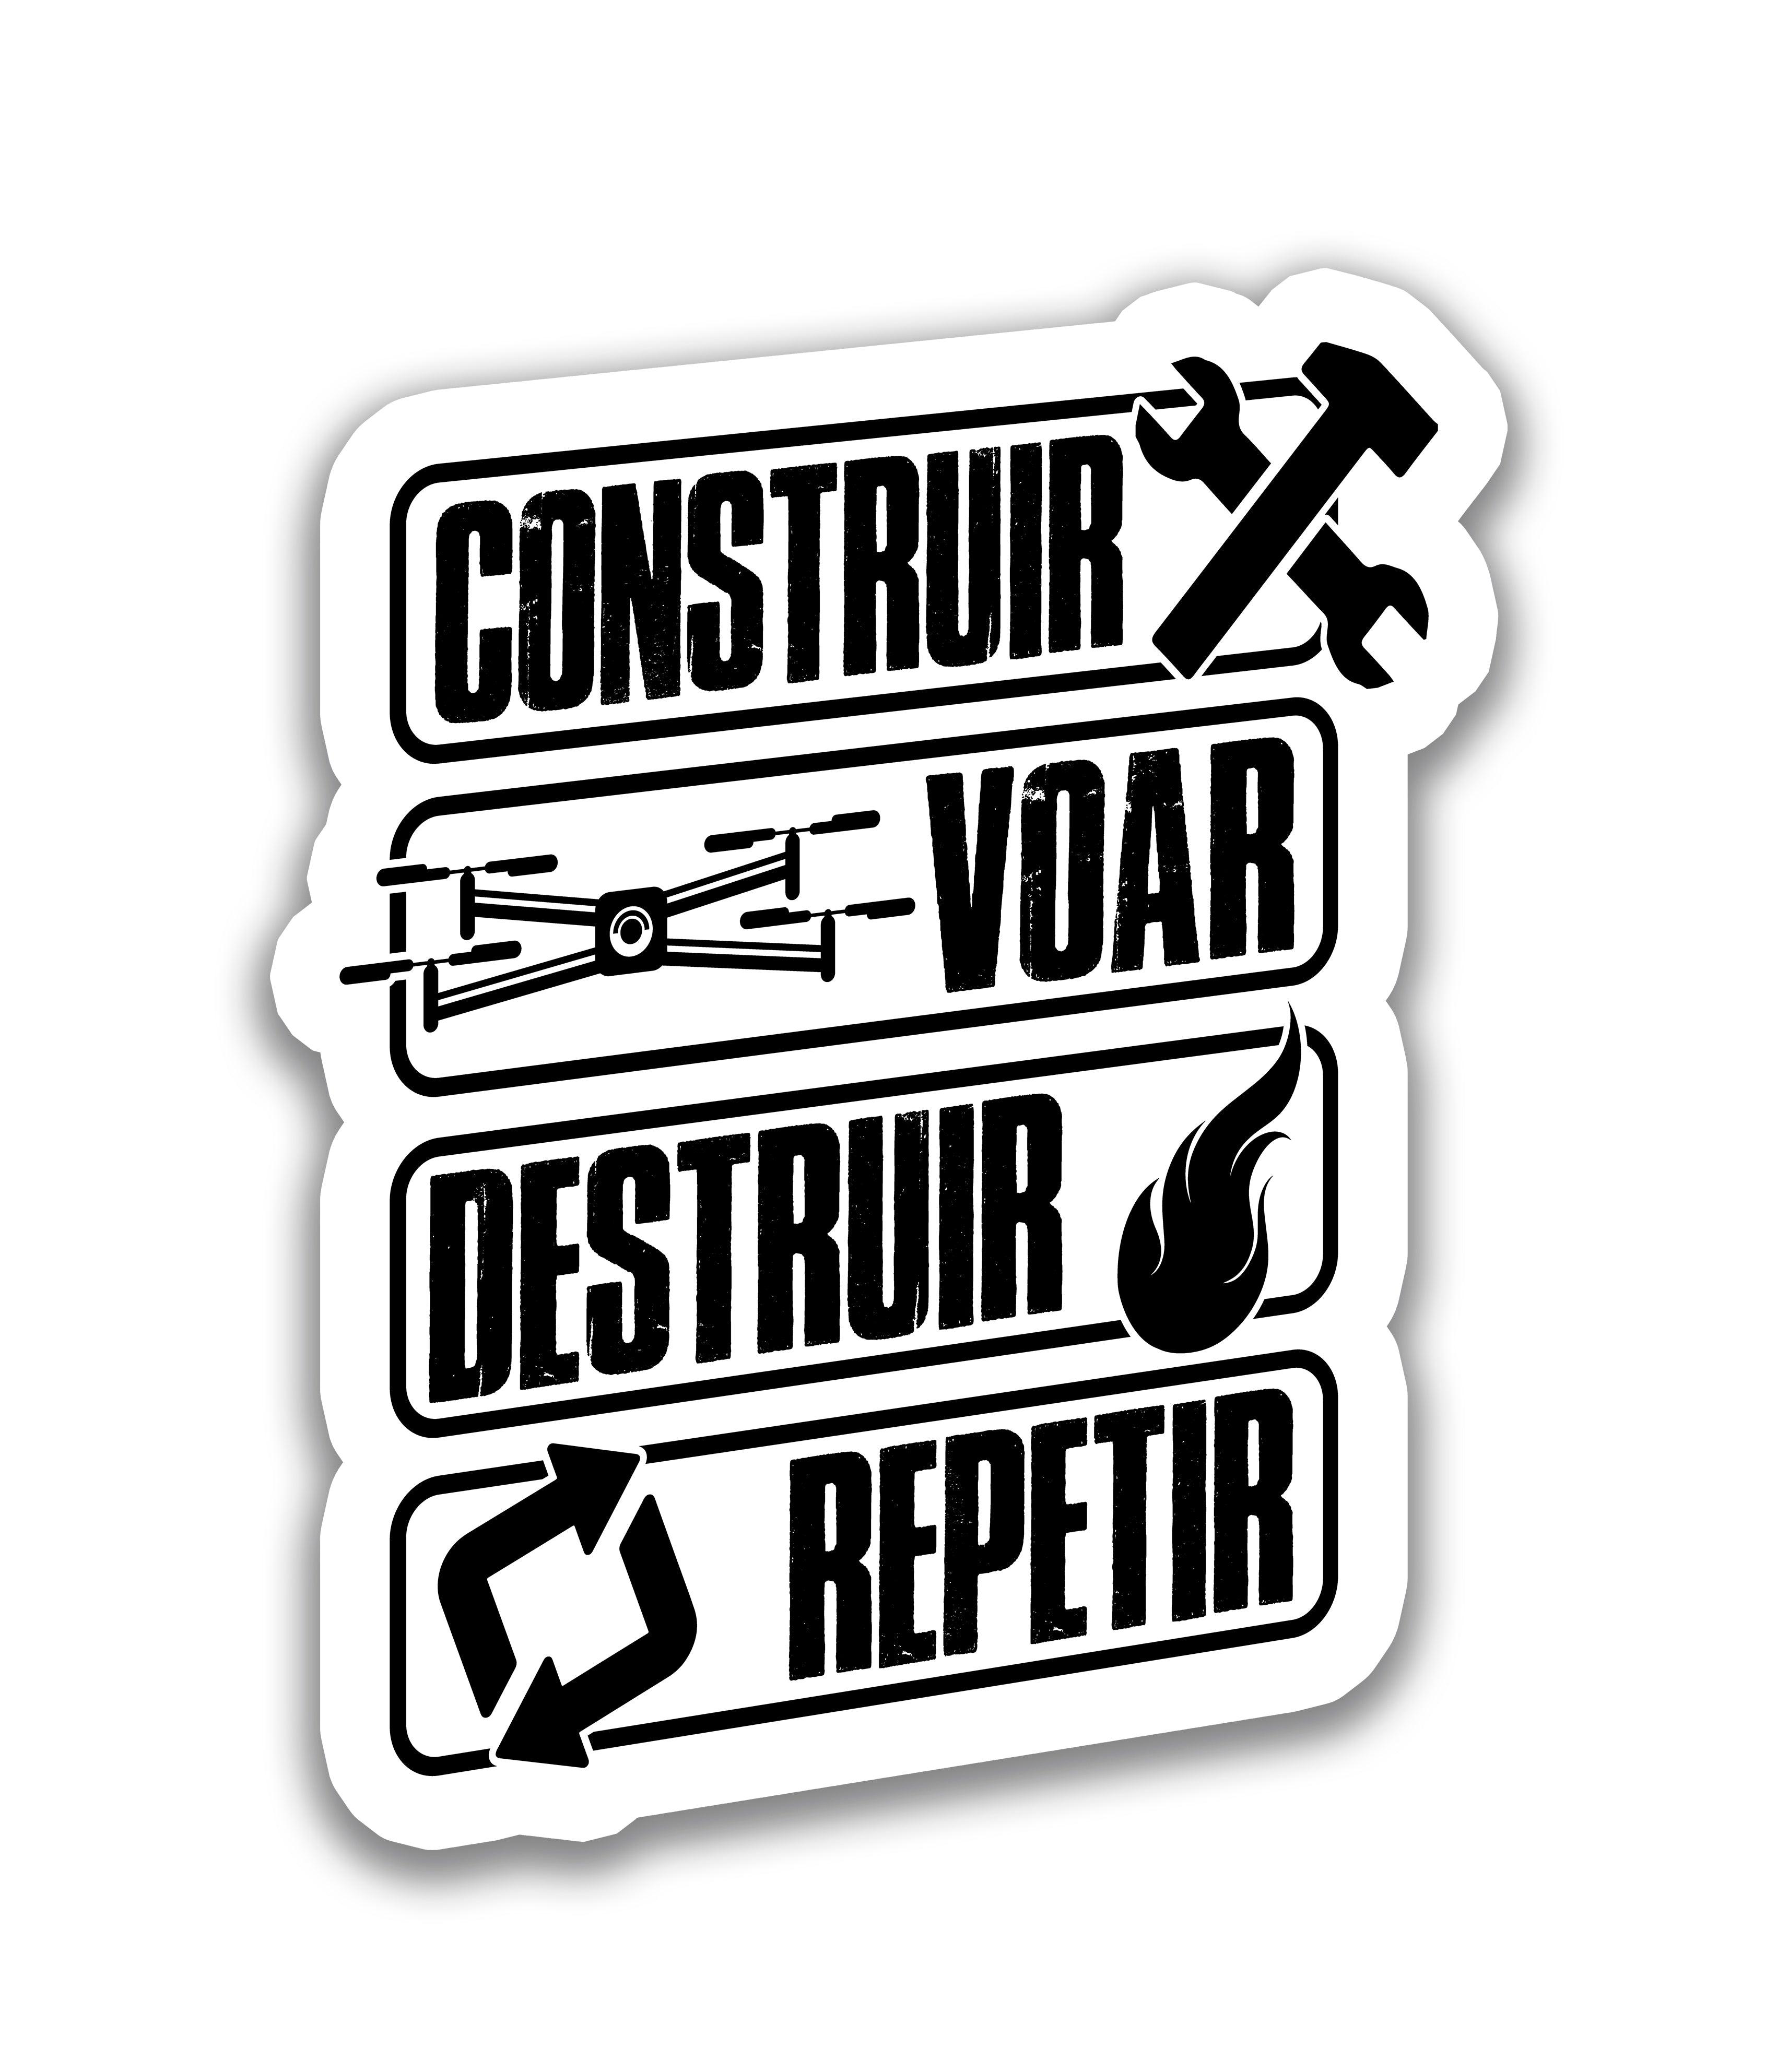 modification - Rei do Sticker